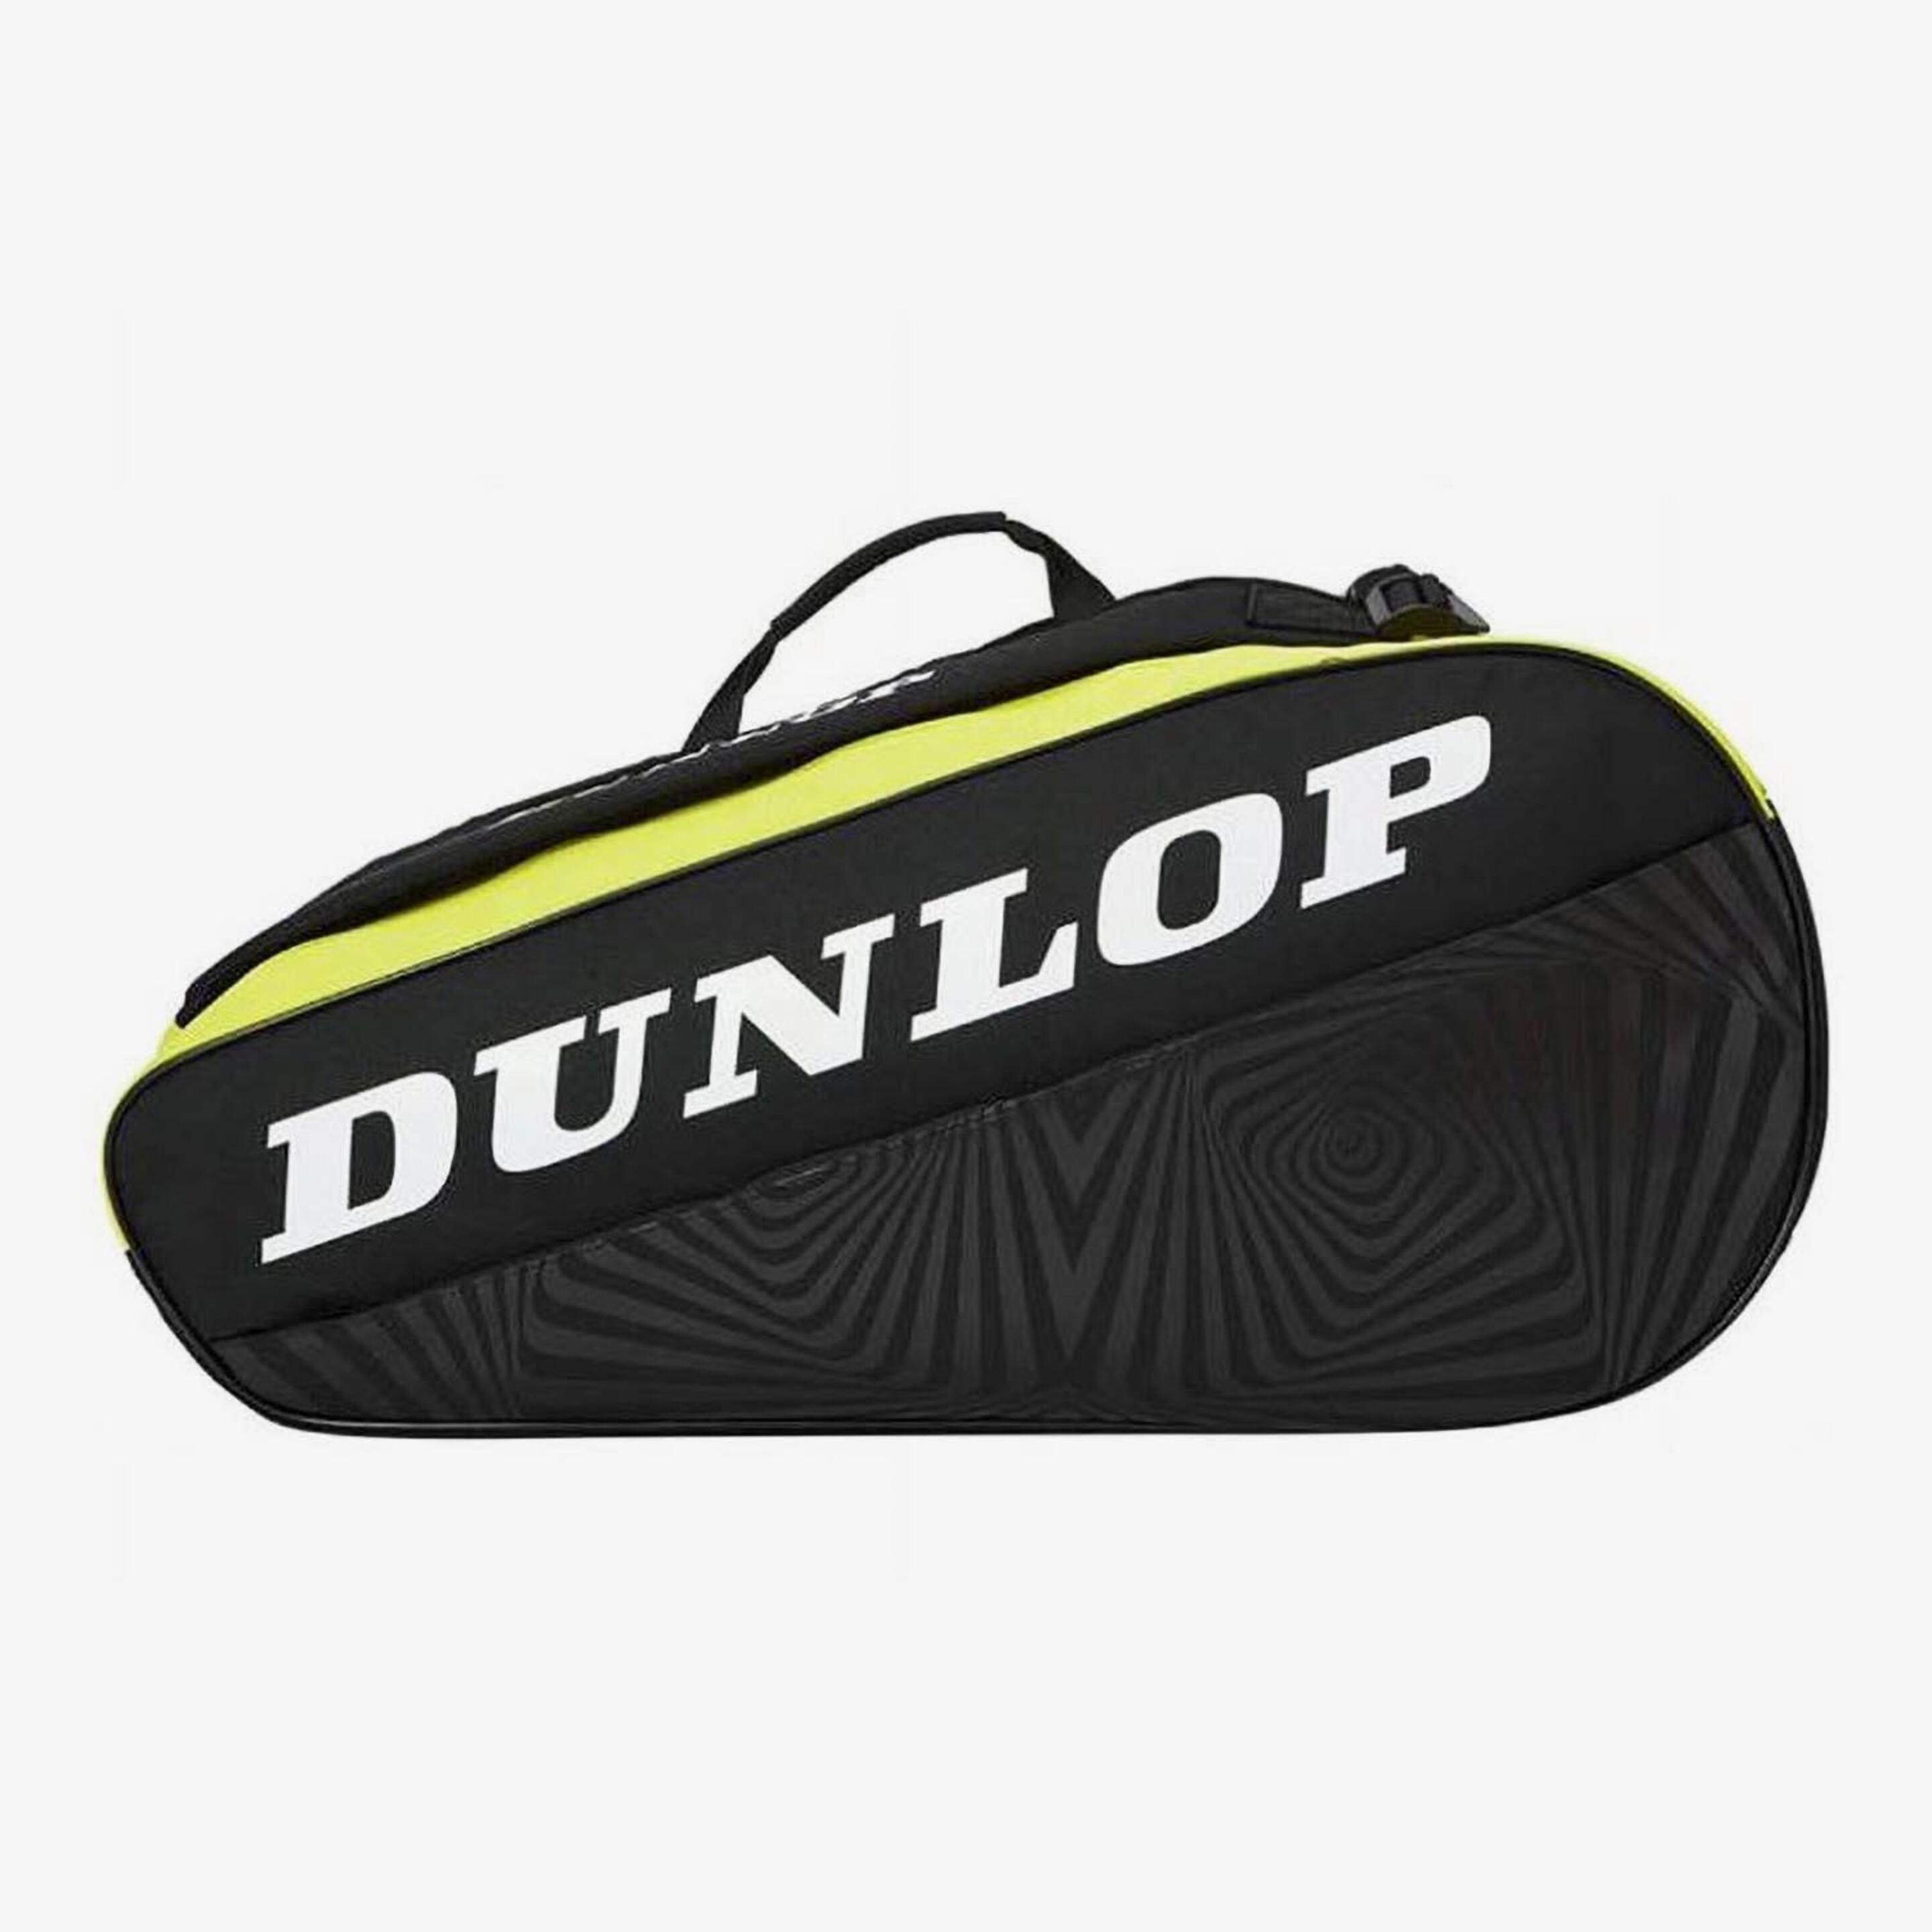 Dunlop Sx-club 6r